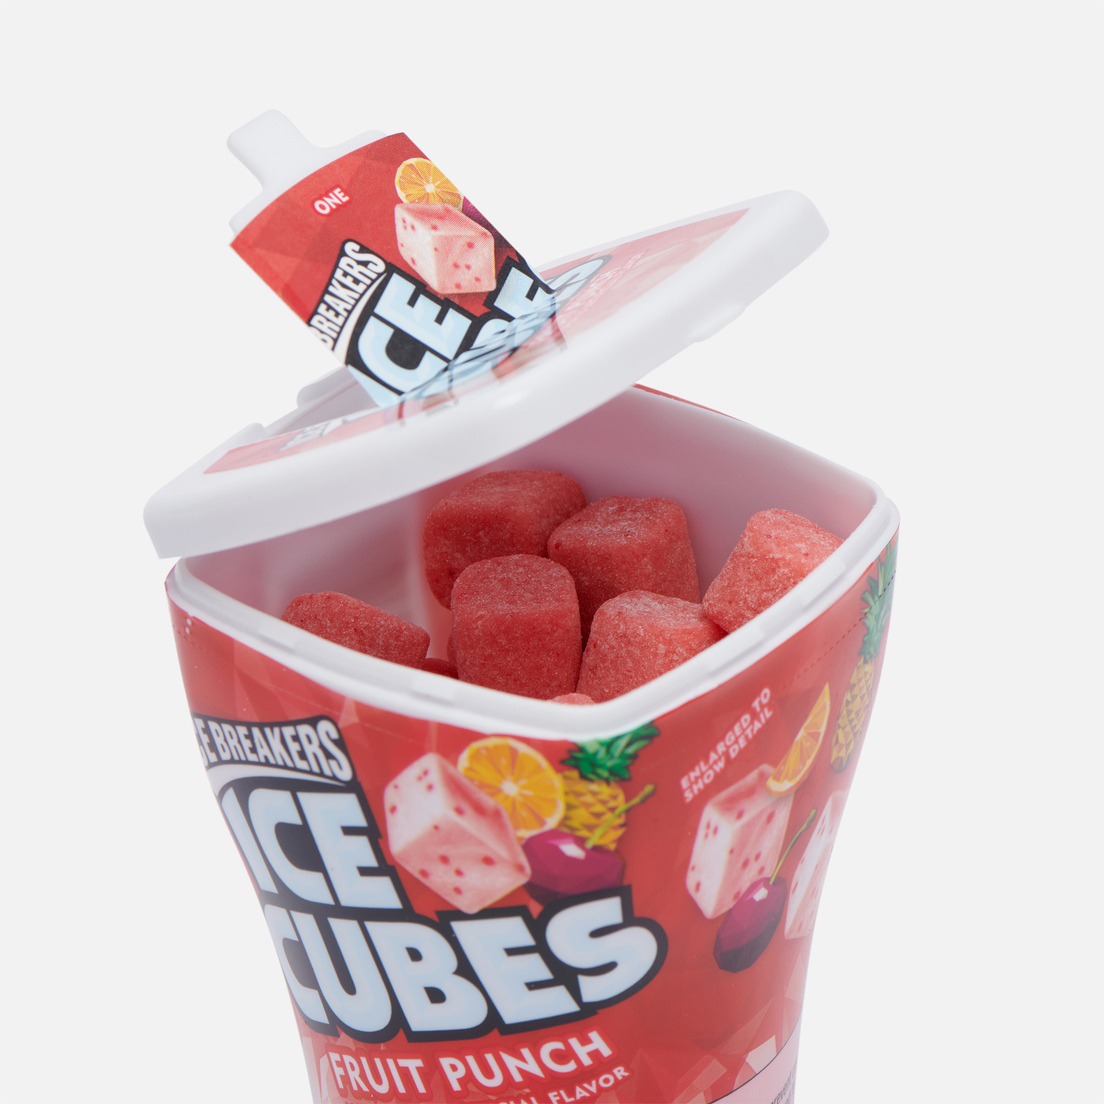 Ice Breakers Жевательная резинка Ice Cubes Fruit Punch